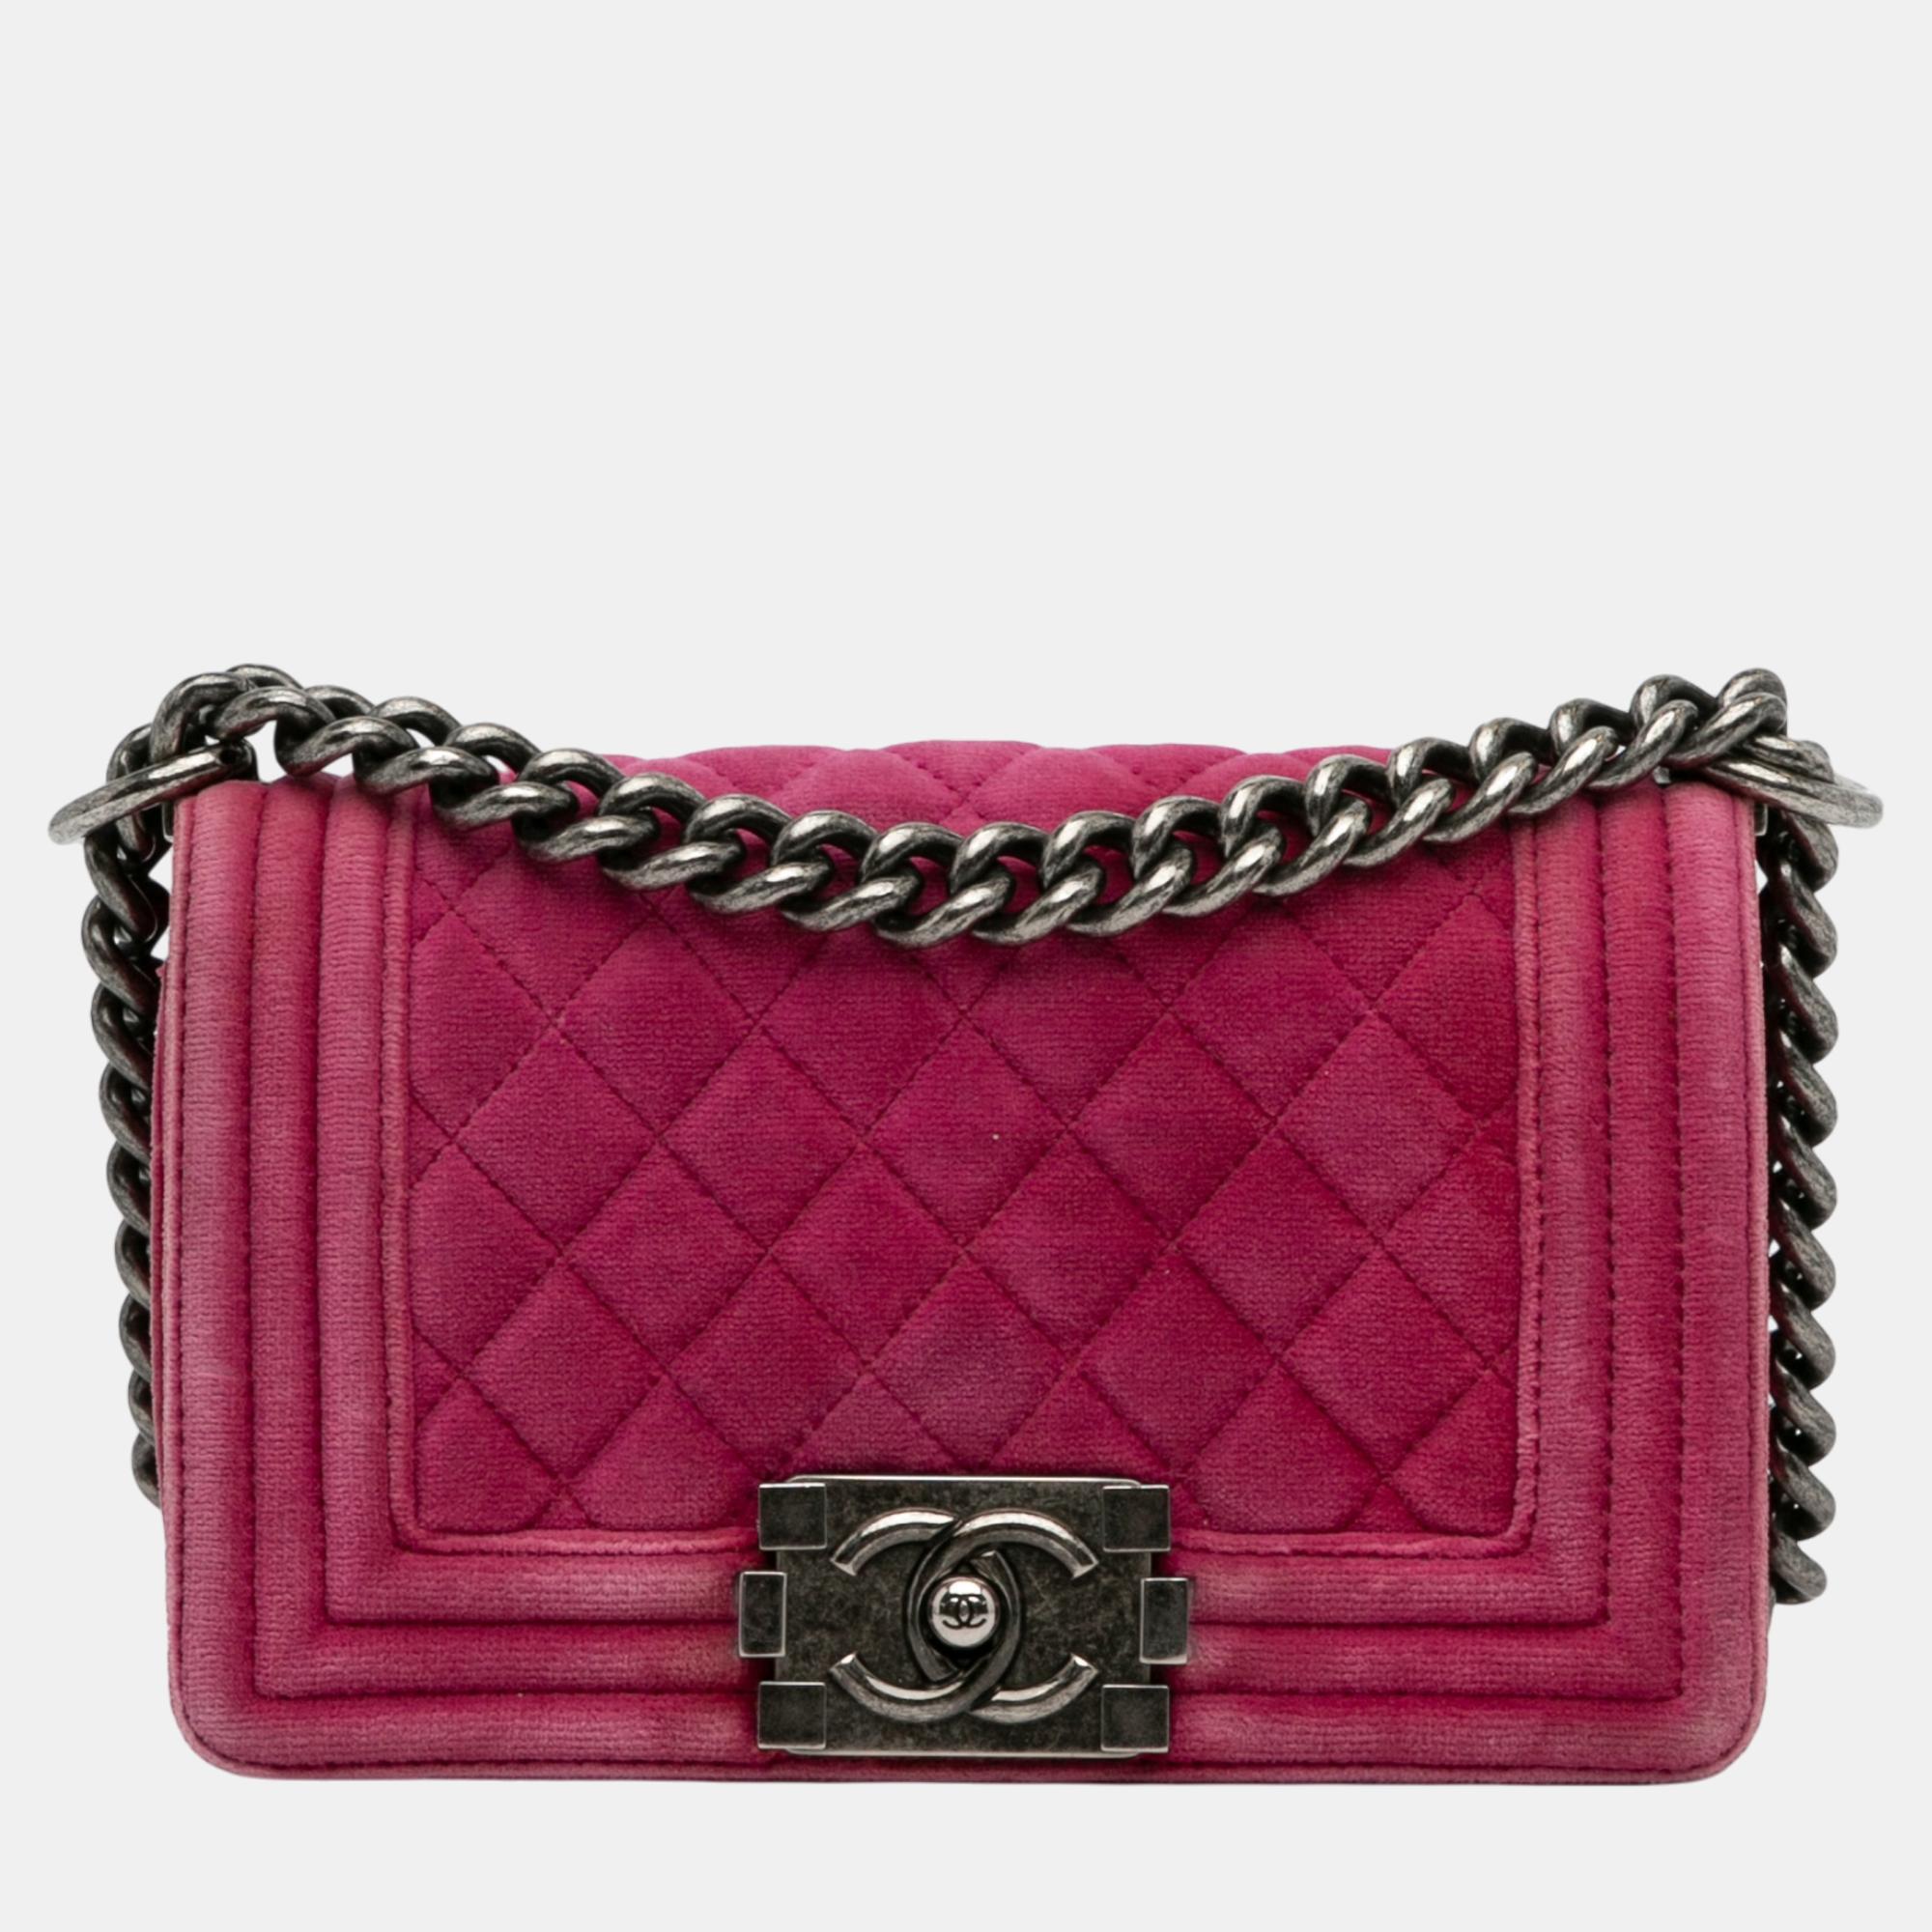 Chanel pink small boy velvet flap bag